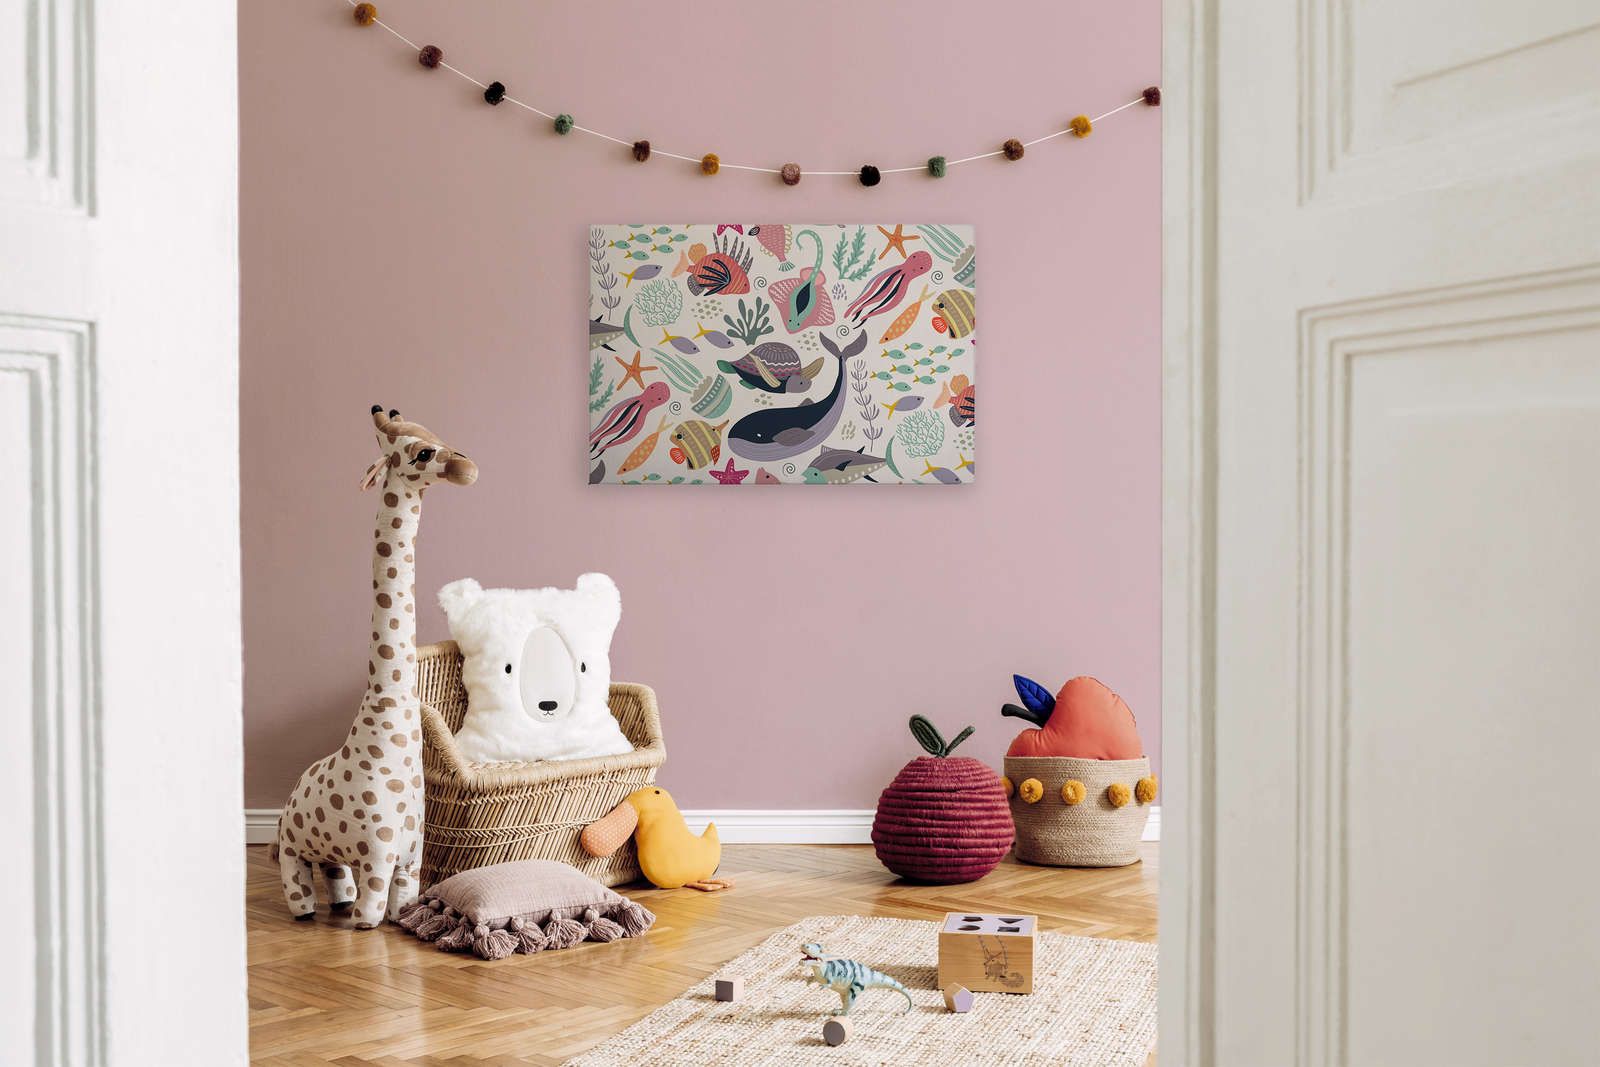             Canvas for children's room with underwater animals - 90 cm x 60 cm
        